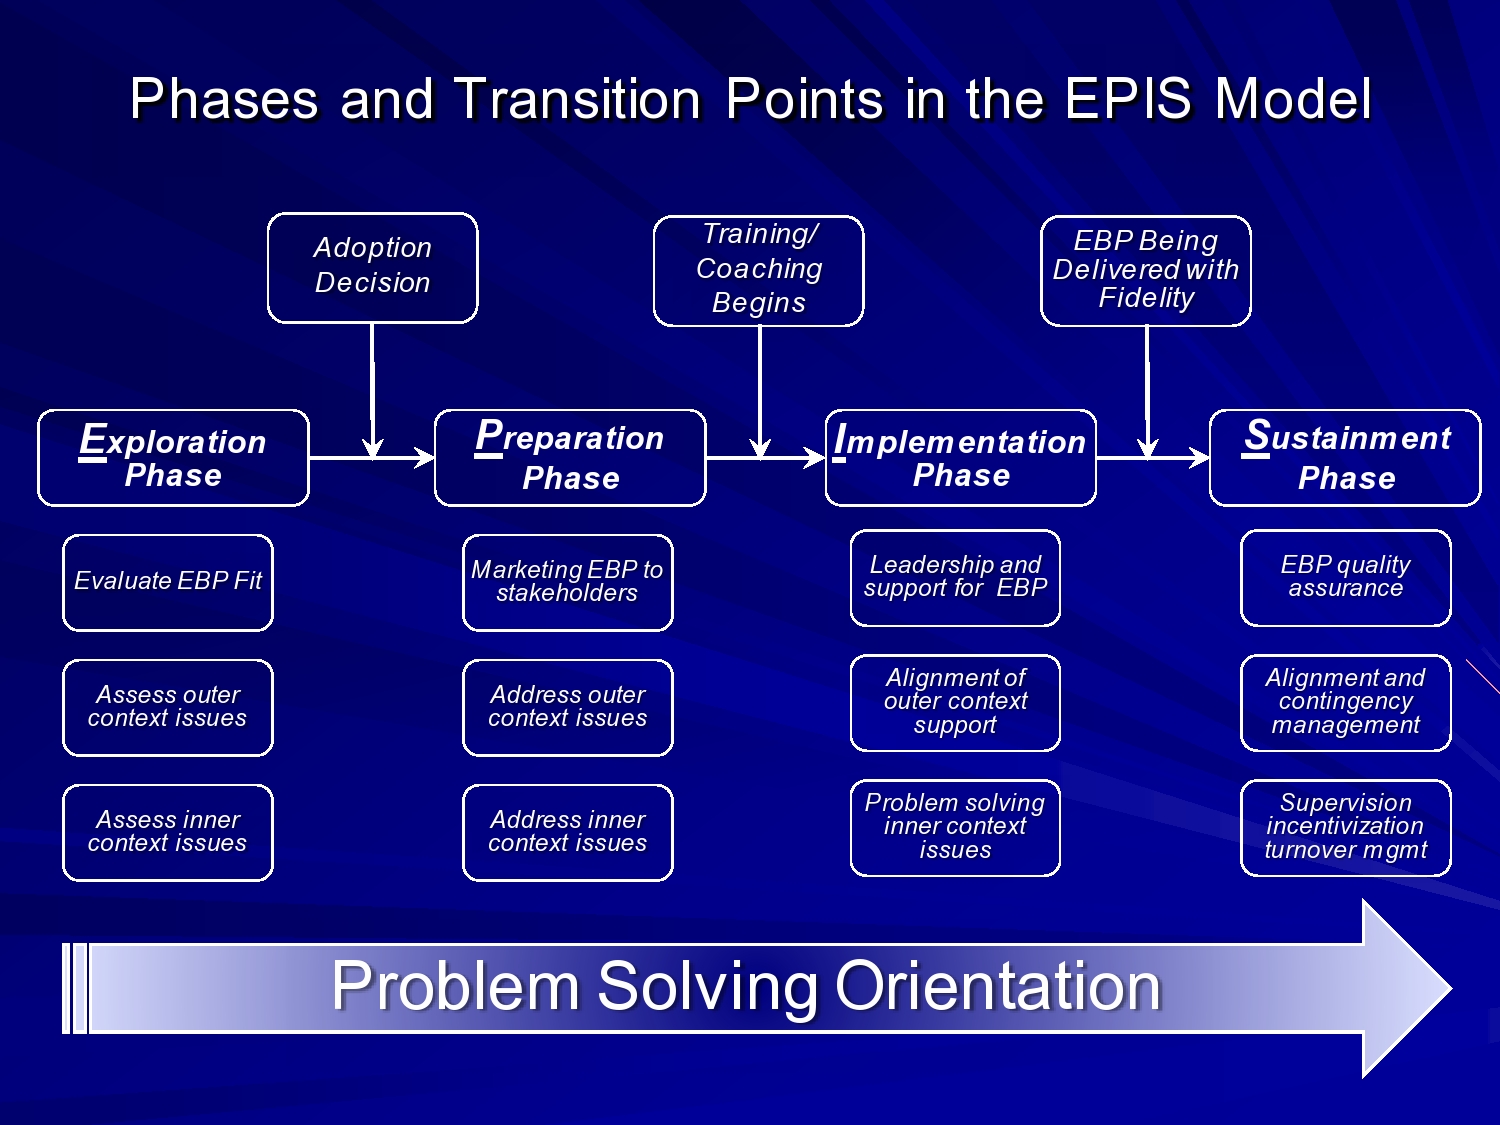 Frameworks to Assess Transition